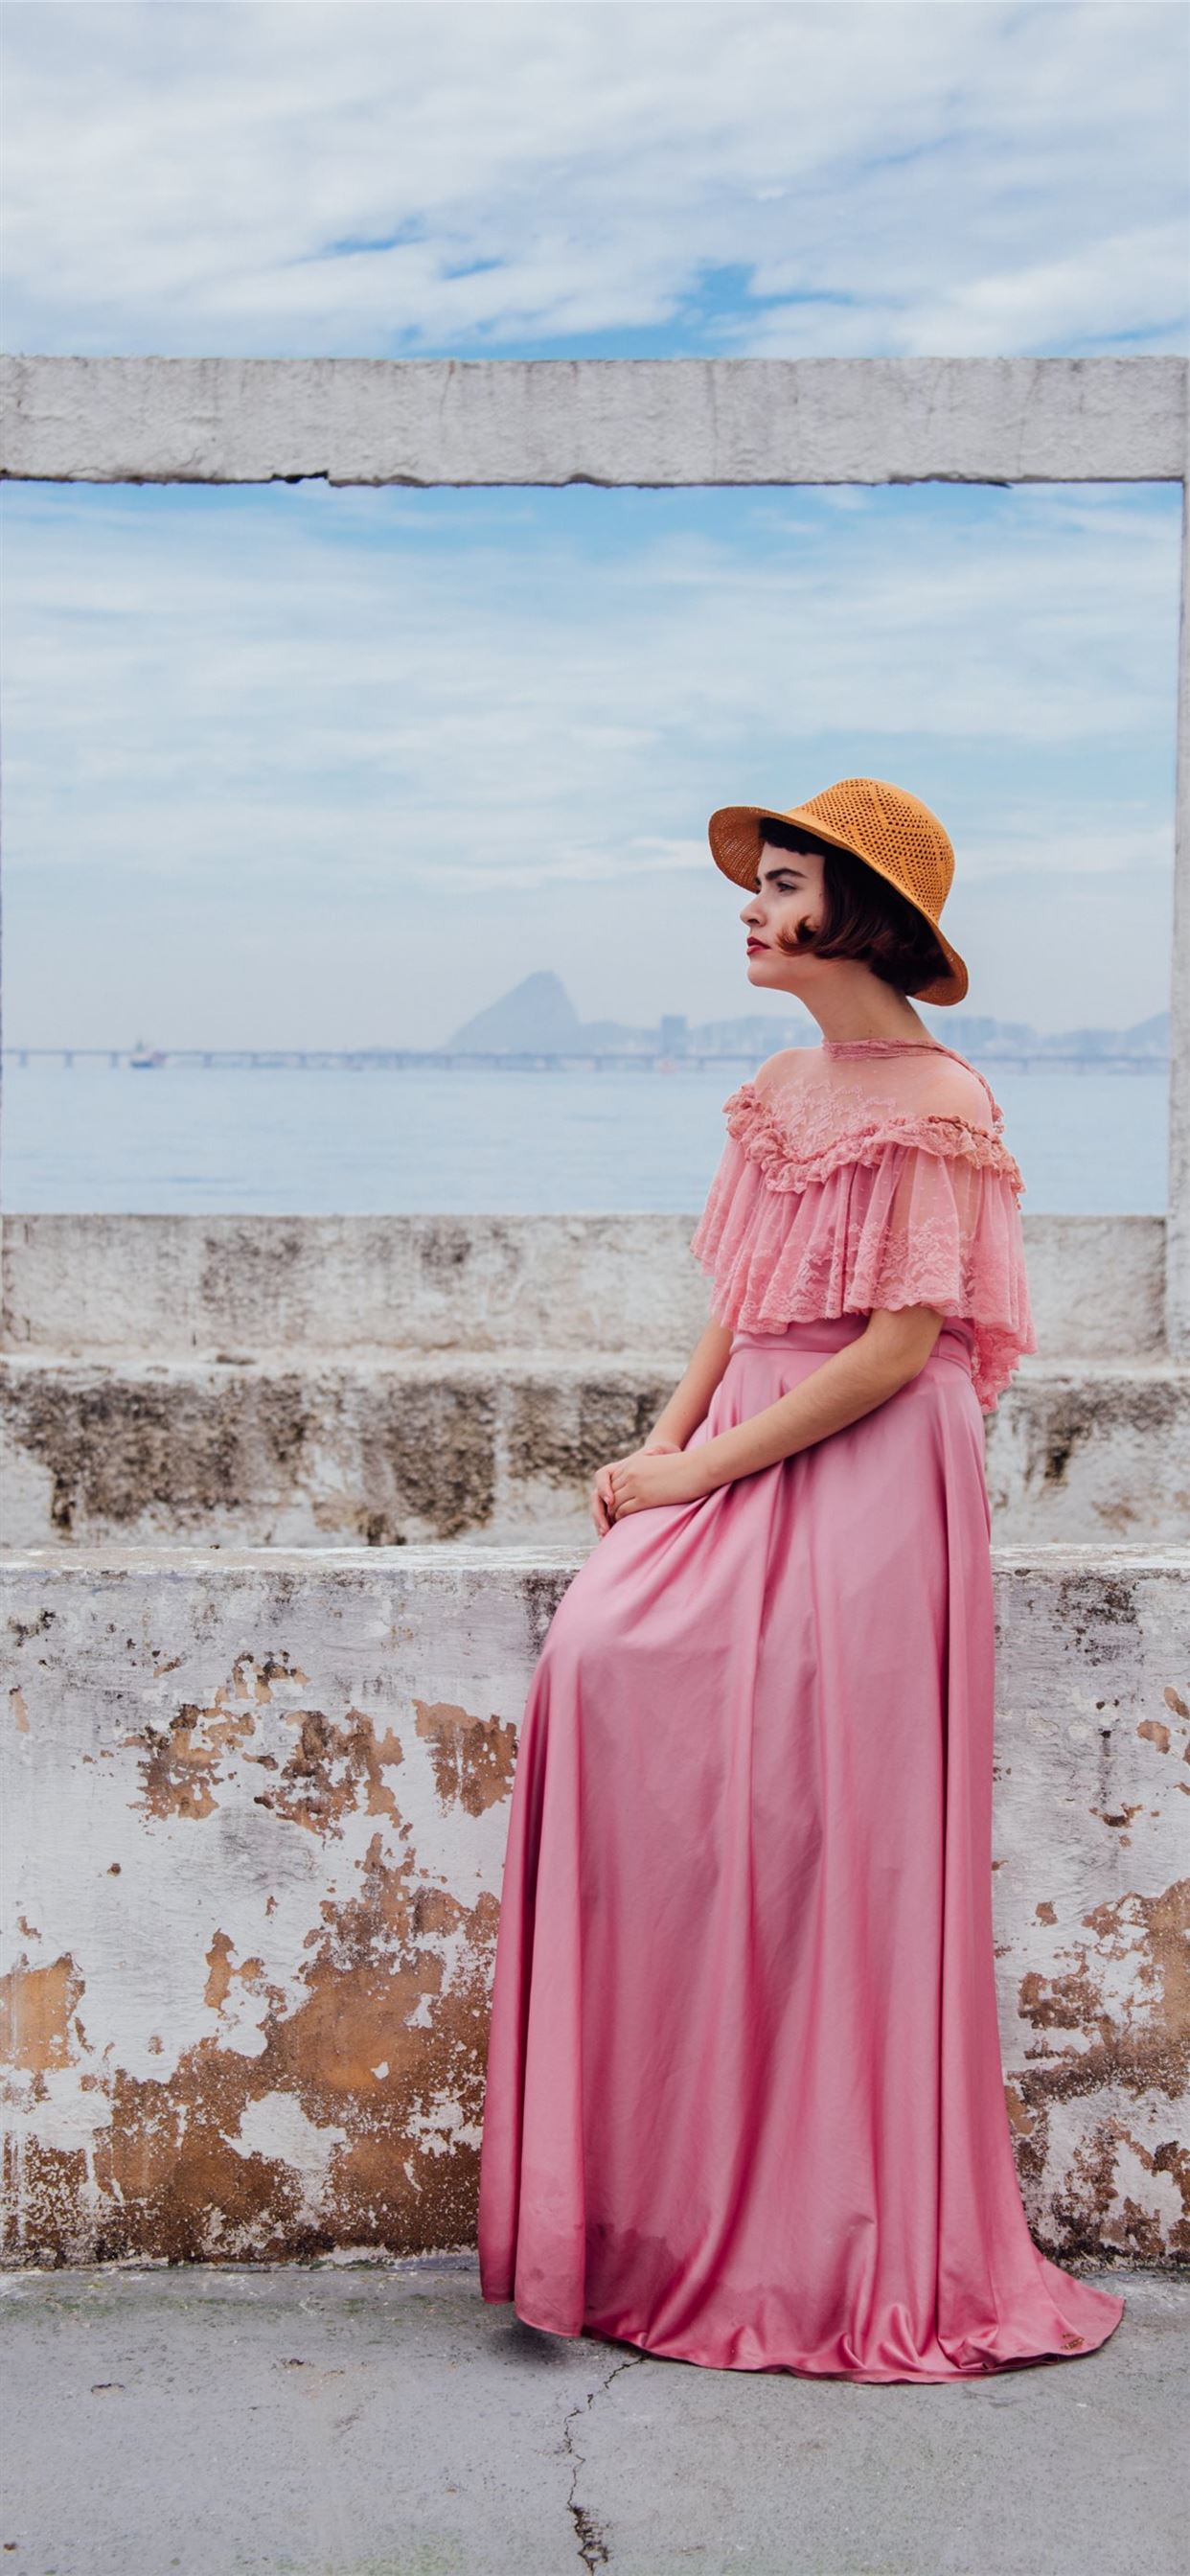 woman wearing pink dress standing next to white wa. iPhone 11 Wallpaper Free Download